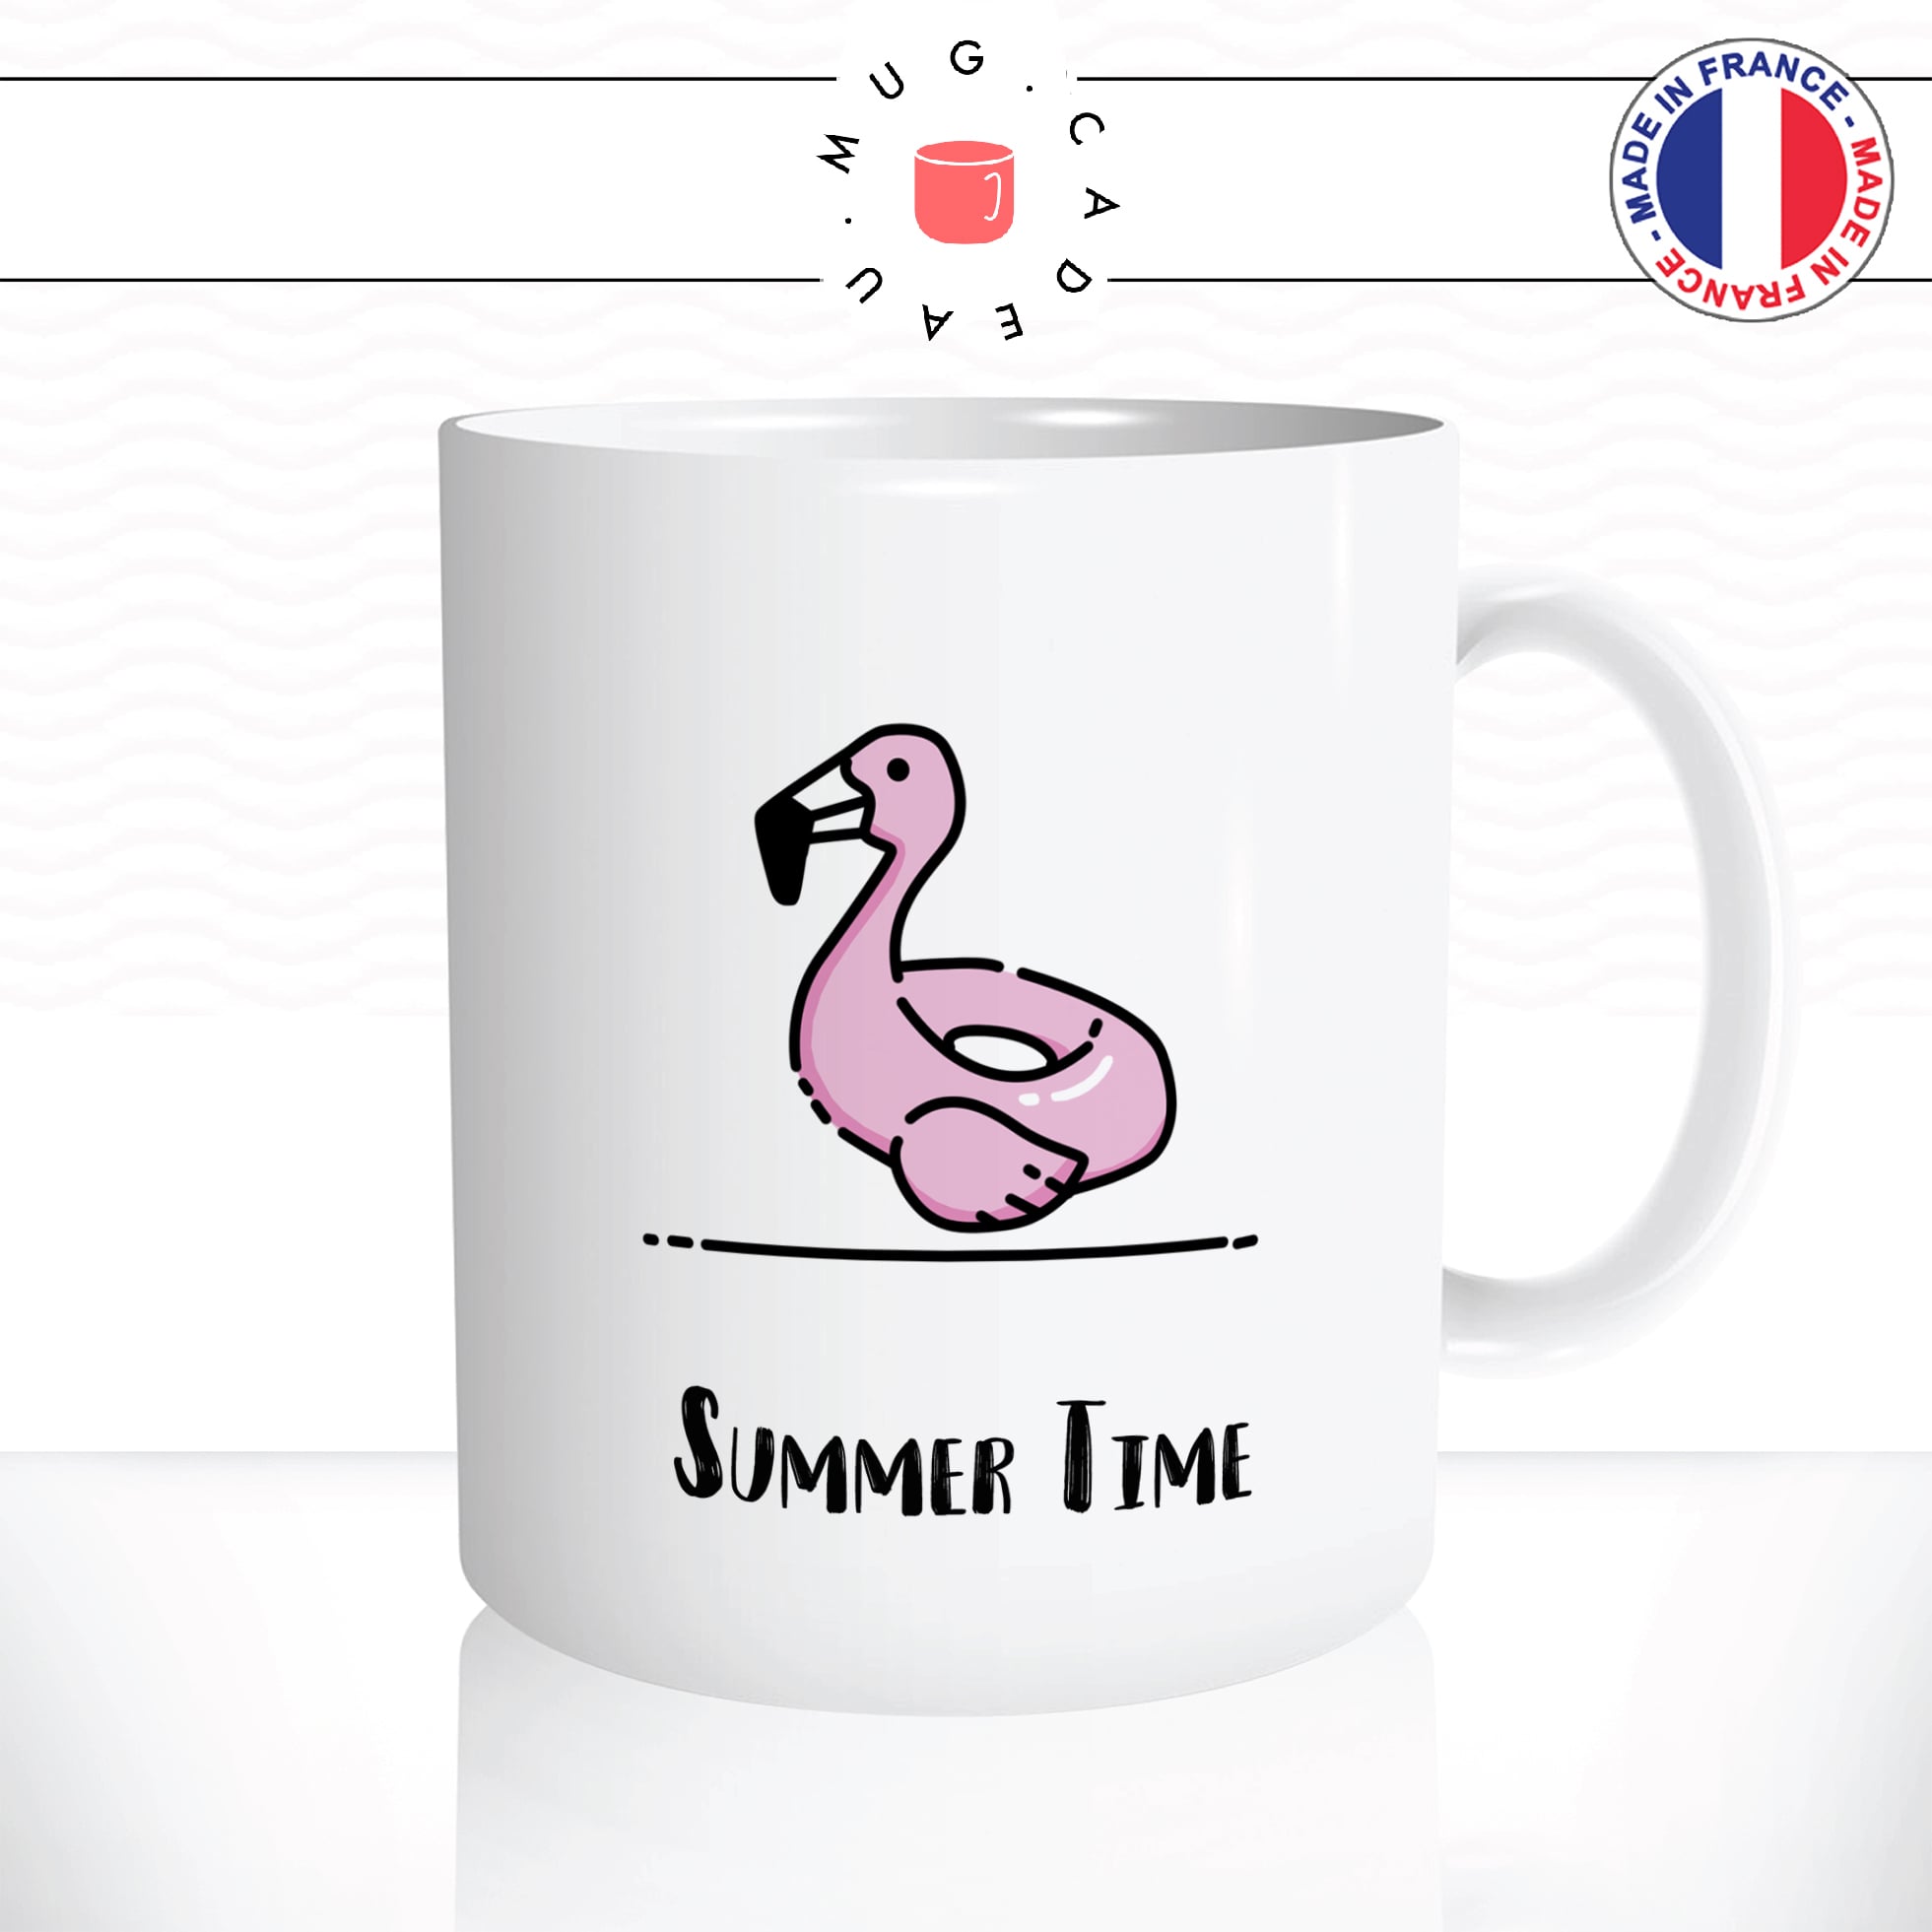 mug-tasse-ref1-flamand-rose-bouee-summer-time-cafe-the-mugs-tasses-personnalise-anse-droite-min